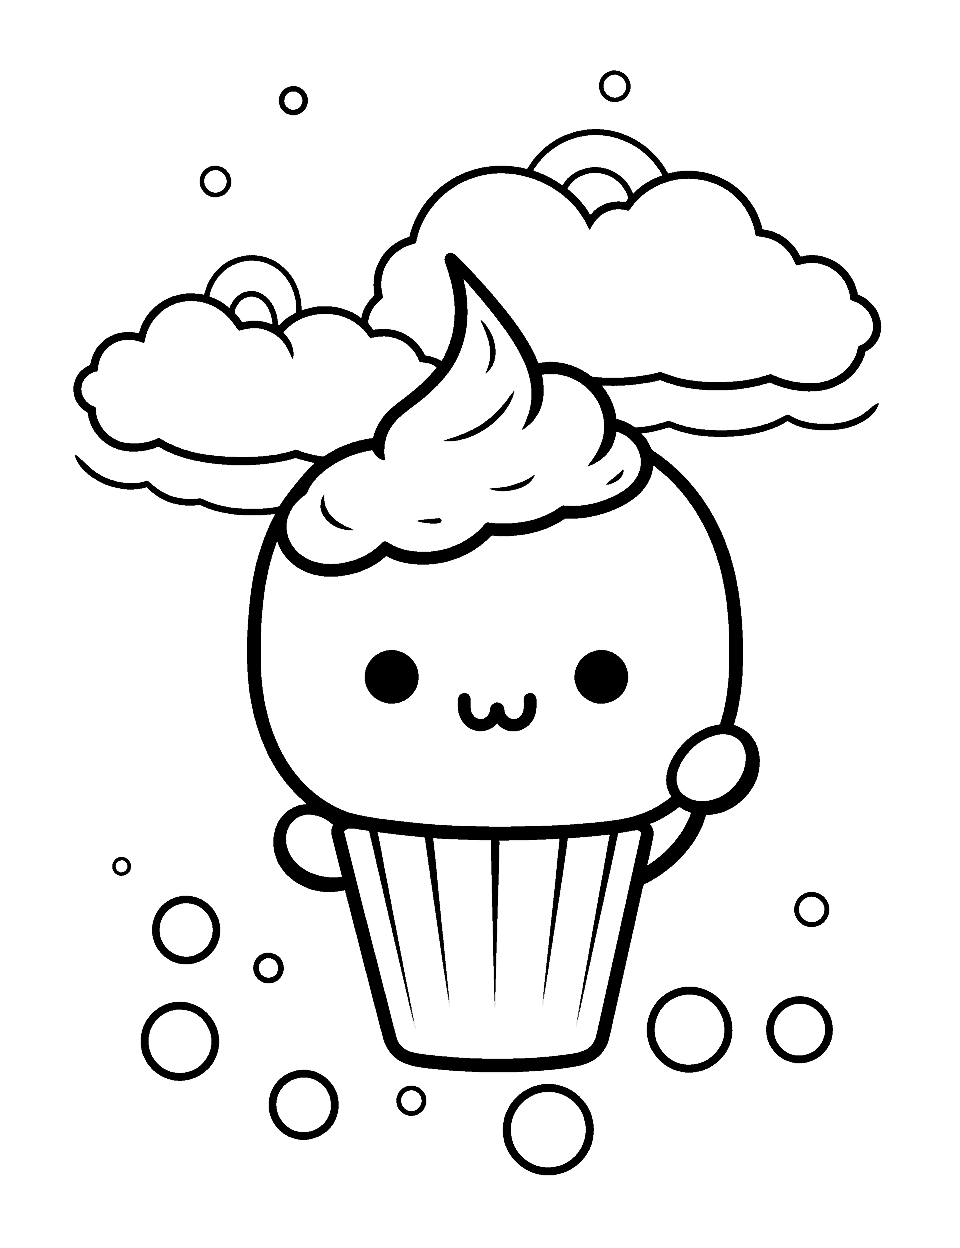 The Adorable Ice Cream Sundae Kawaii Coloring Page - A tall, yummy sundae with a cute face.